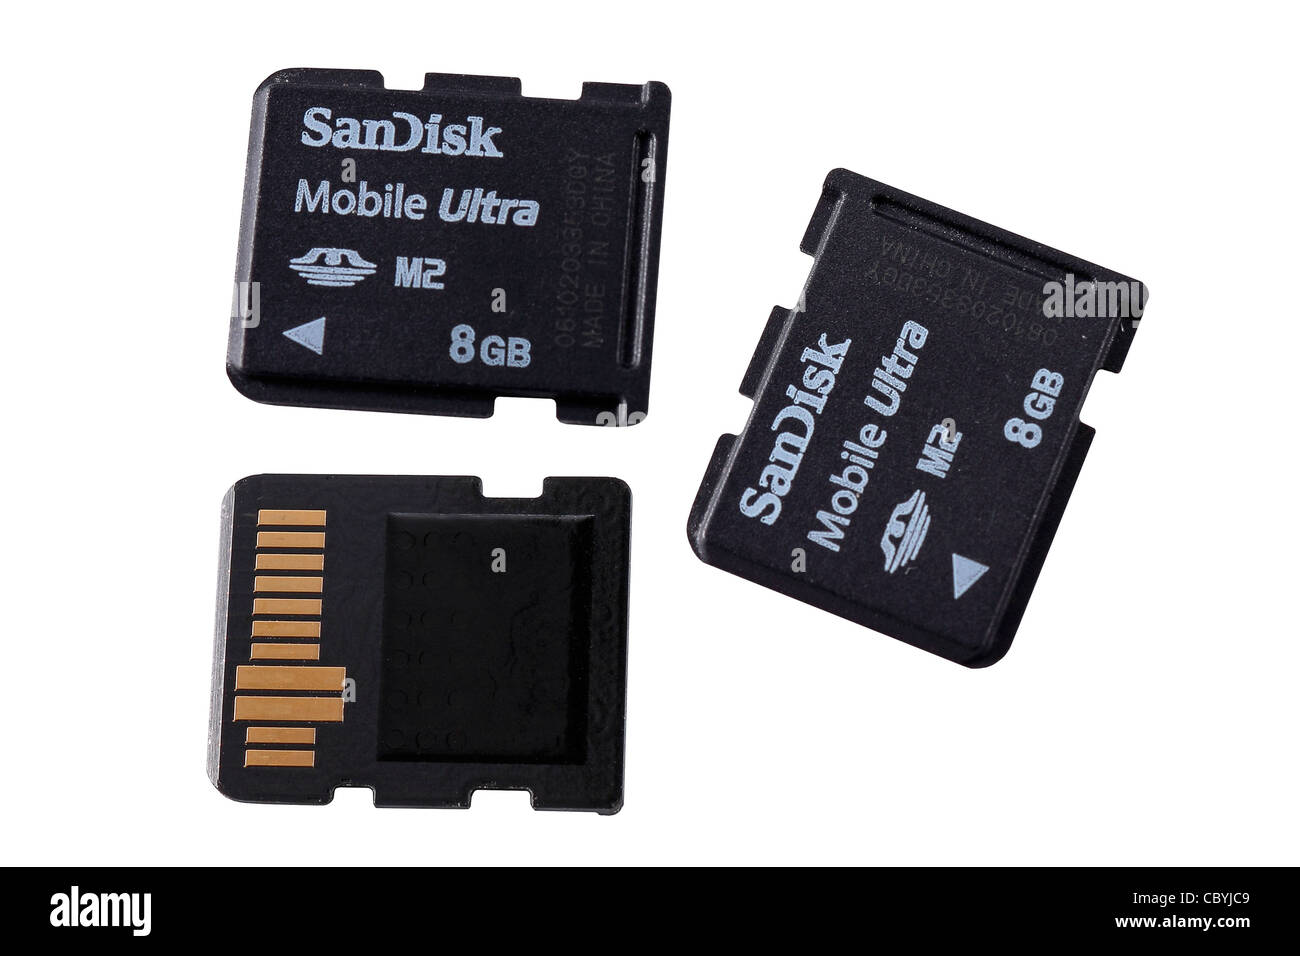 8GB Sandisk Mobile Ultra Memory Stick Micro M2 Stockfotografie - Alamy